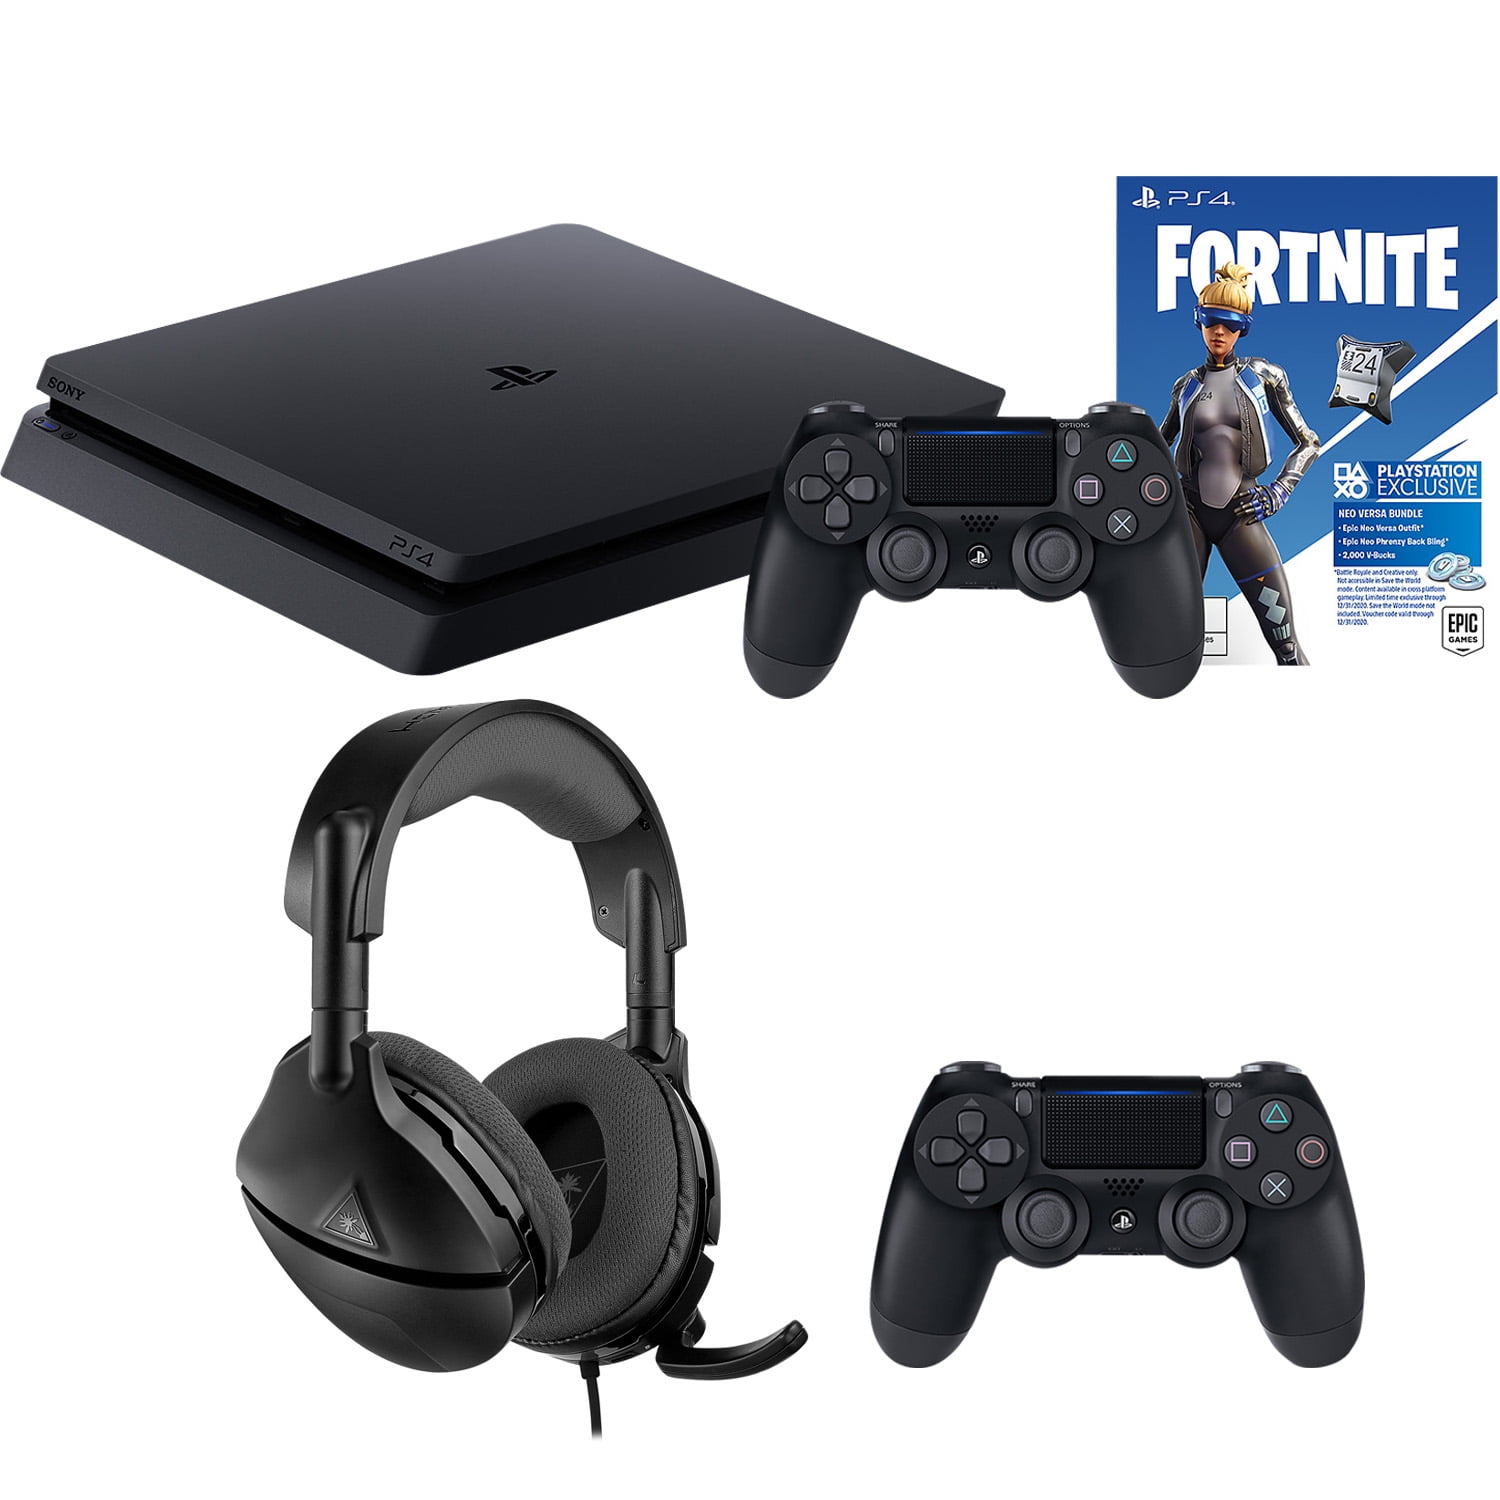 Fortnite PlayStation 4 Game Controller and Bundle, Sony, - Walmart.com